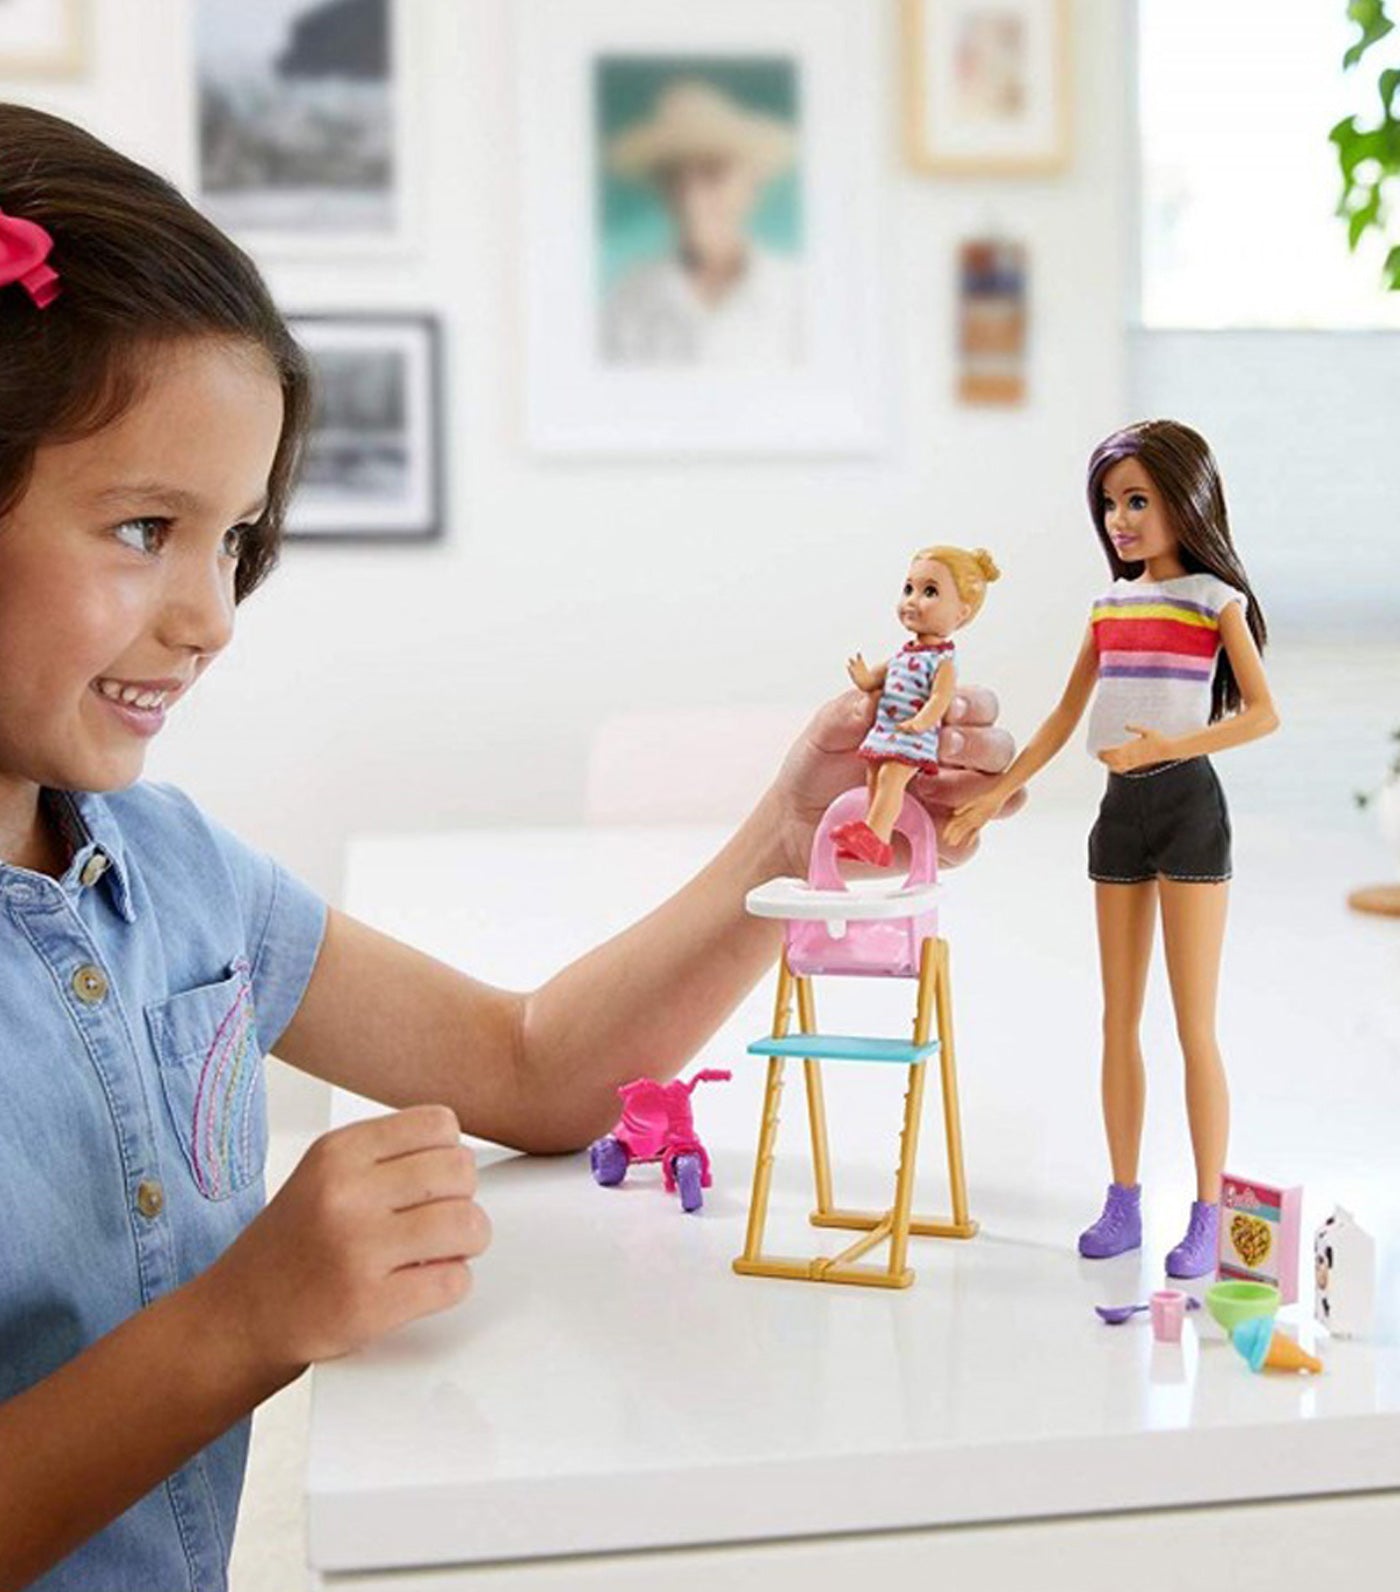 barbie® babysitters inc. playset feedingtime